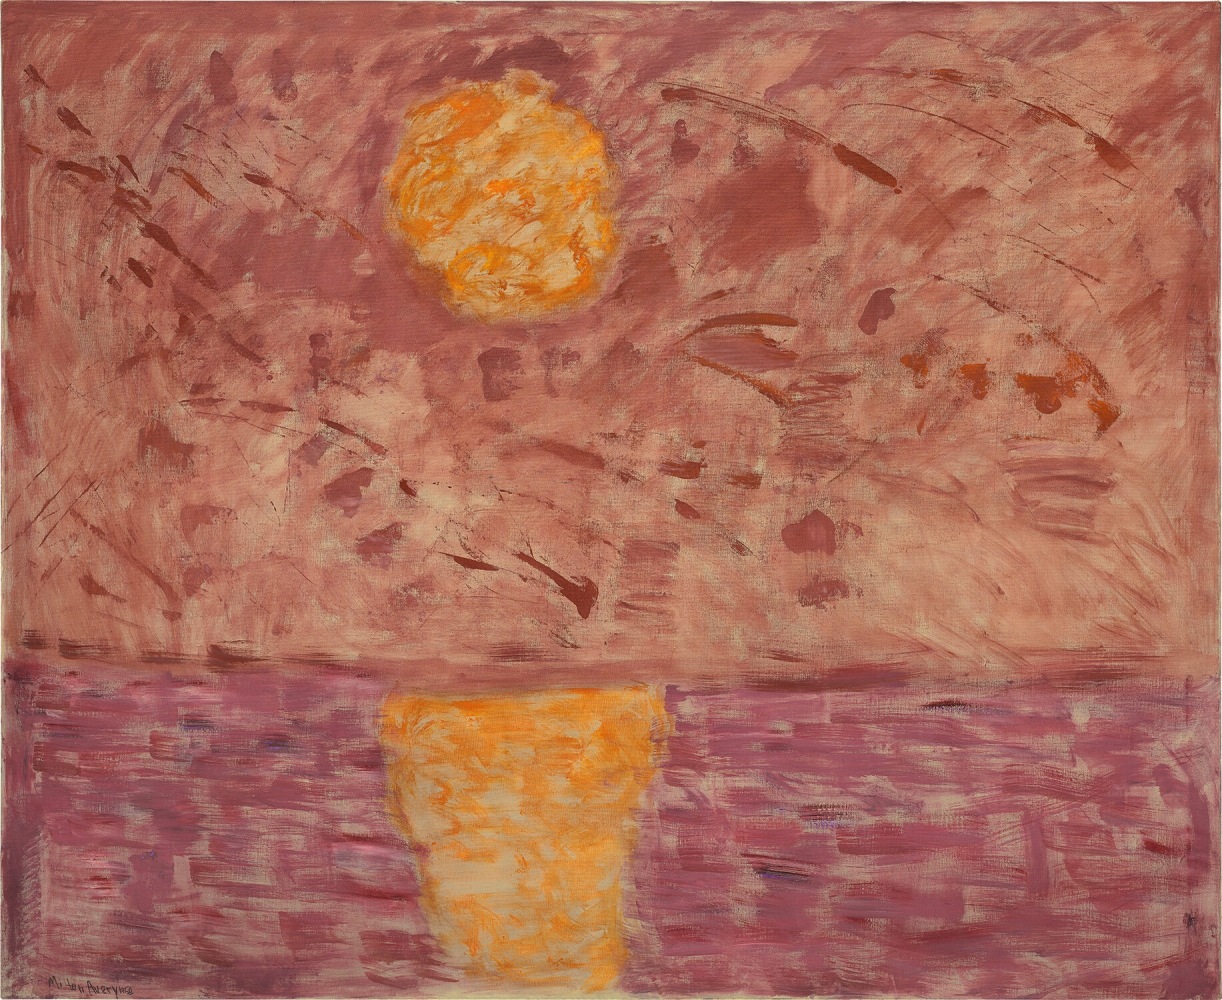 MILTON AVERY (1885-1965)

Hot Moon

1958

Oil on canvas

54 x 66 1/8 inches

137.2 x 168cm